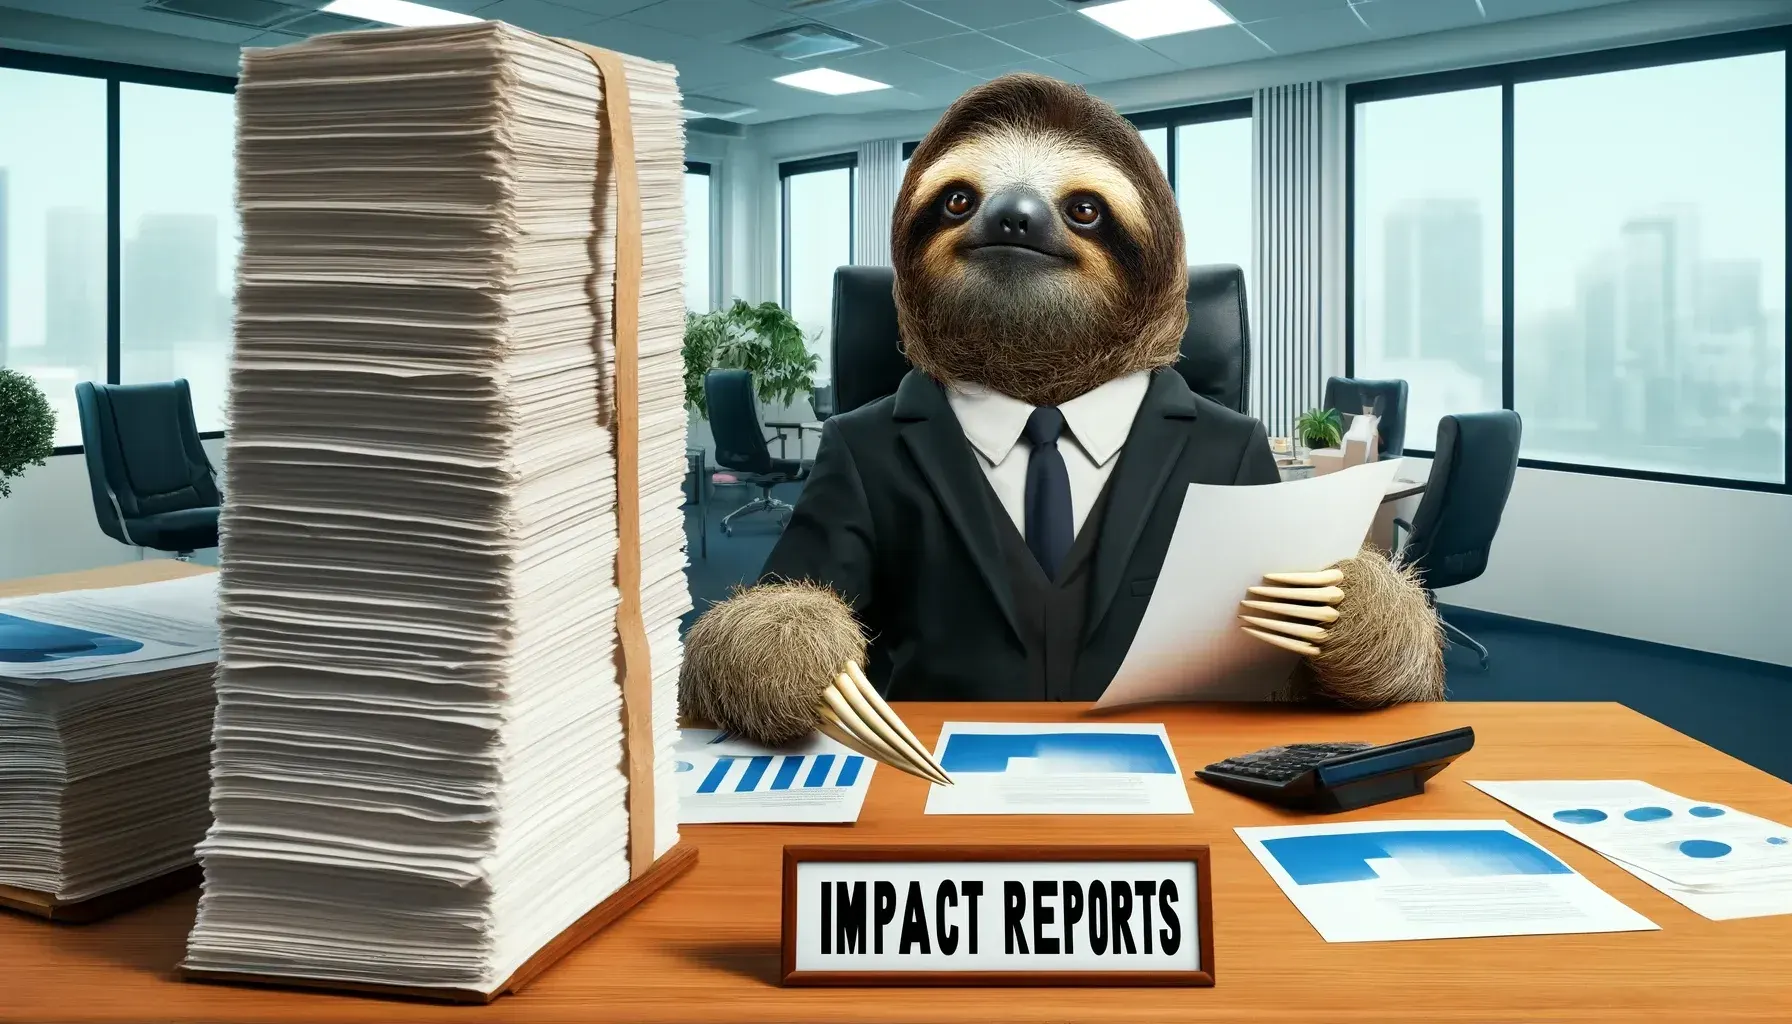 Impact reports sloth